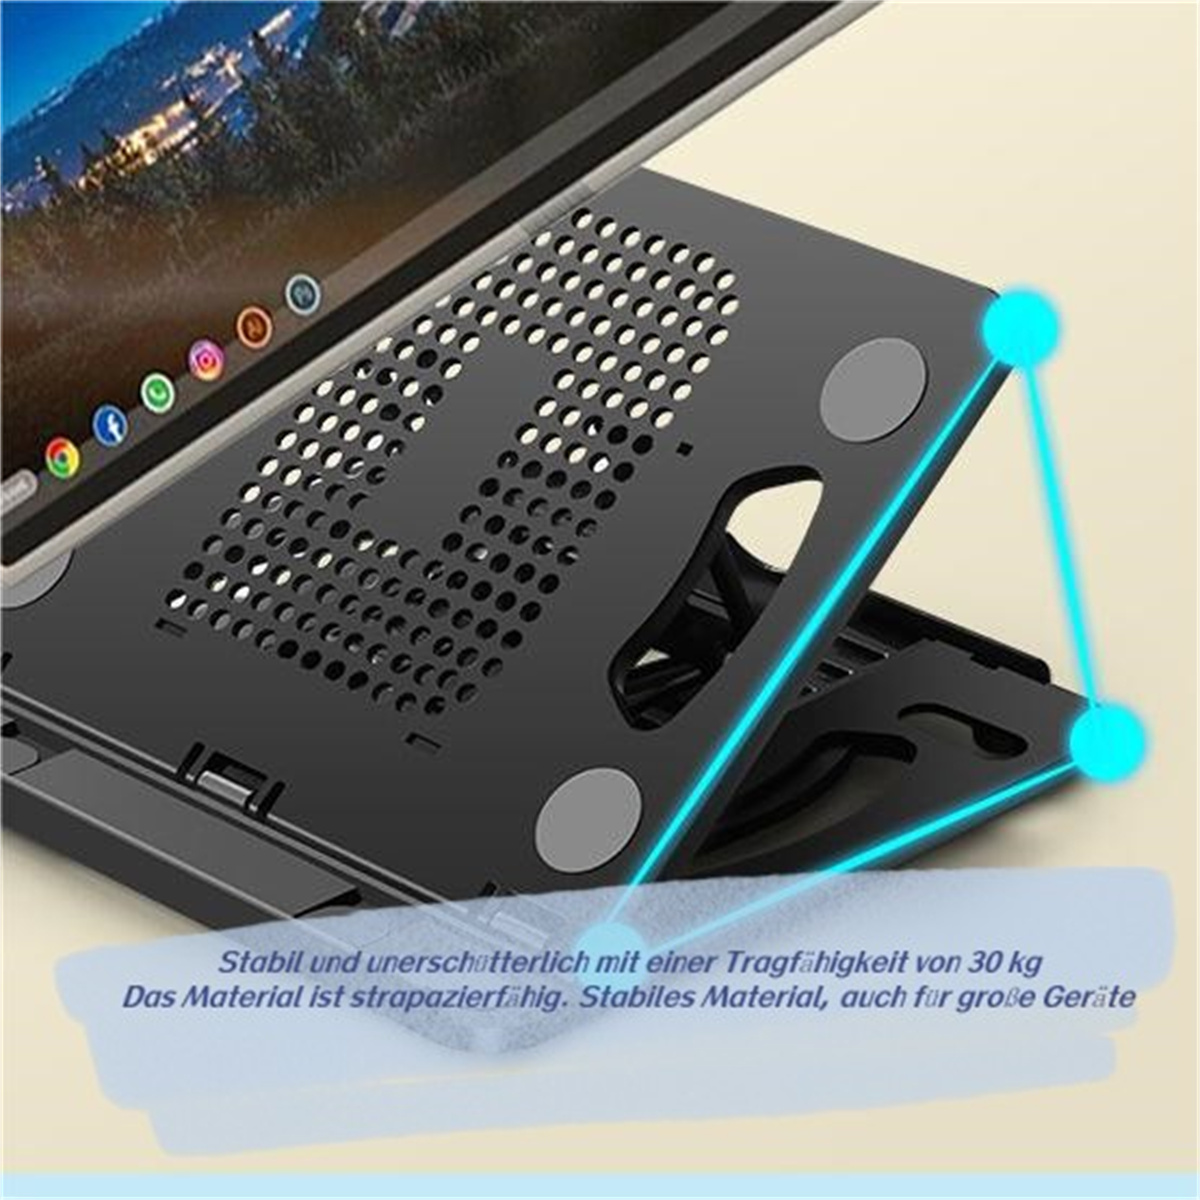 Kühlung bequem Tablet stehen Computer Laptop Höhe Desktop tragbare Lift SHAOKE Ständer Tablette Büro erhöhen klappbar